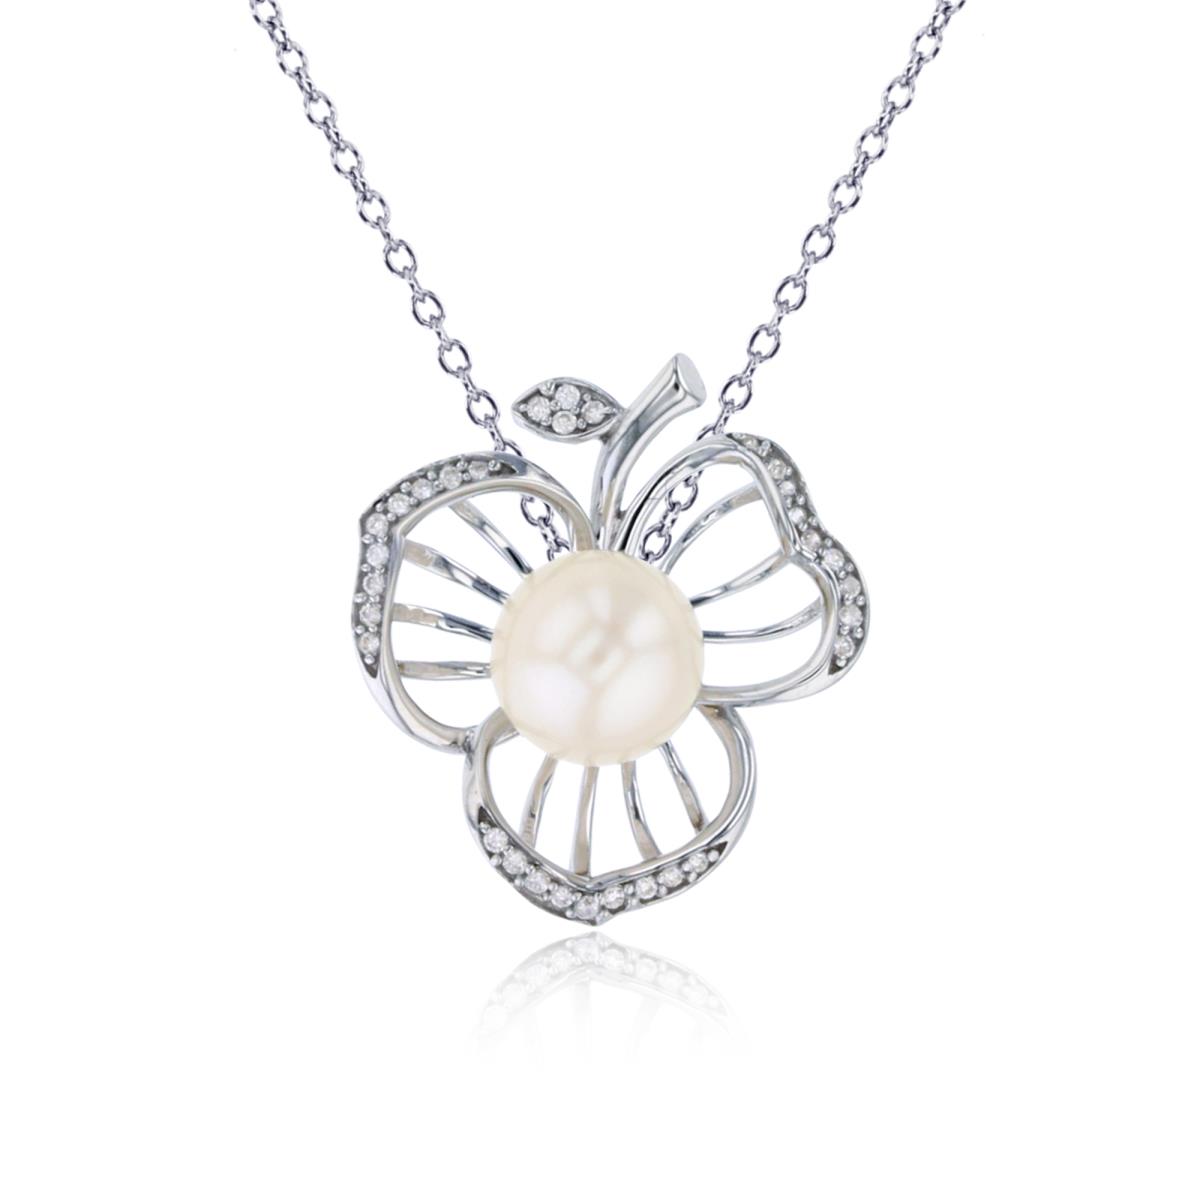 14K White Gold 0.10CTTW Rnd Diamonds & 7mm White Pearl Flower 18"Necklace